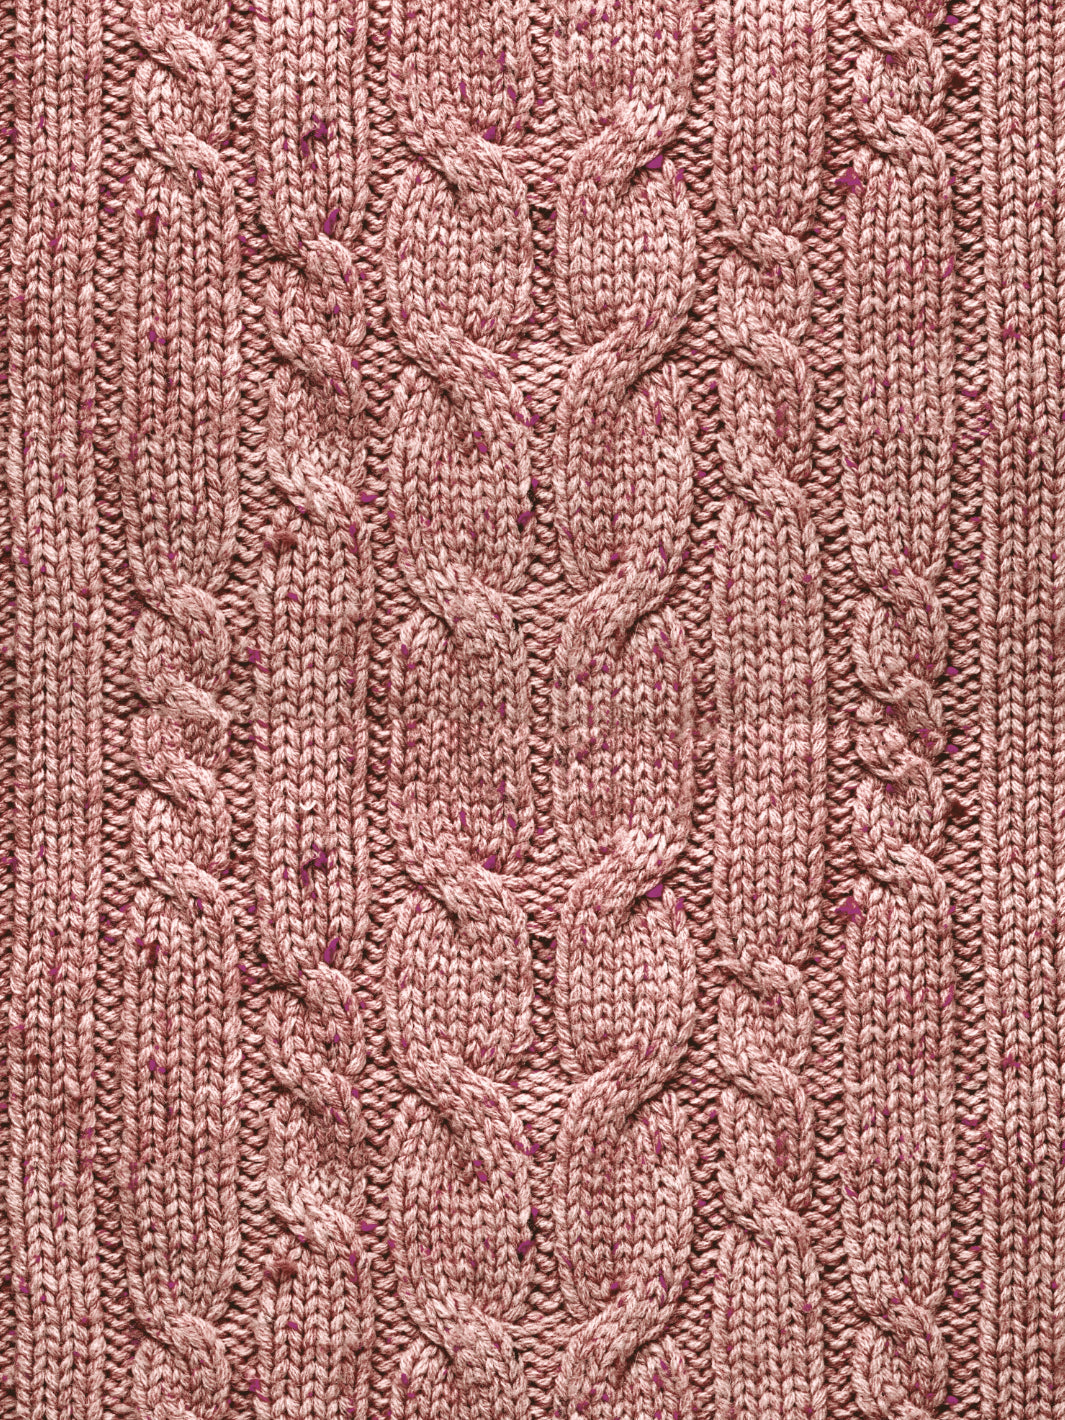 'Cable Knit' Wallpaper by Lingua Franca - Mauve